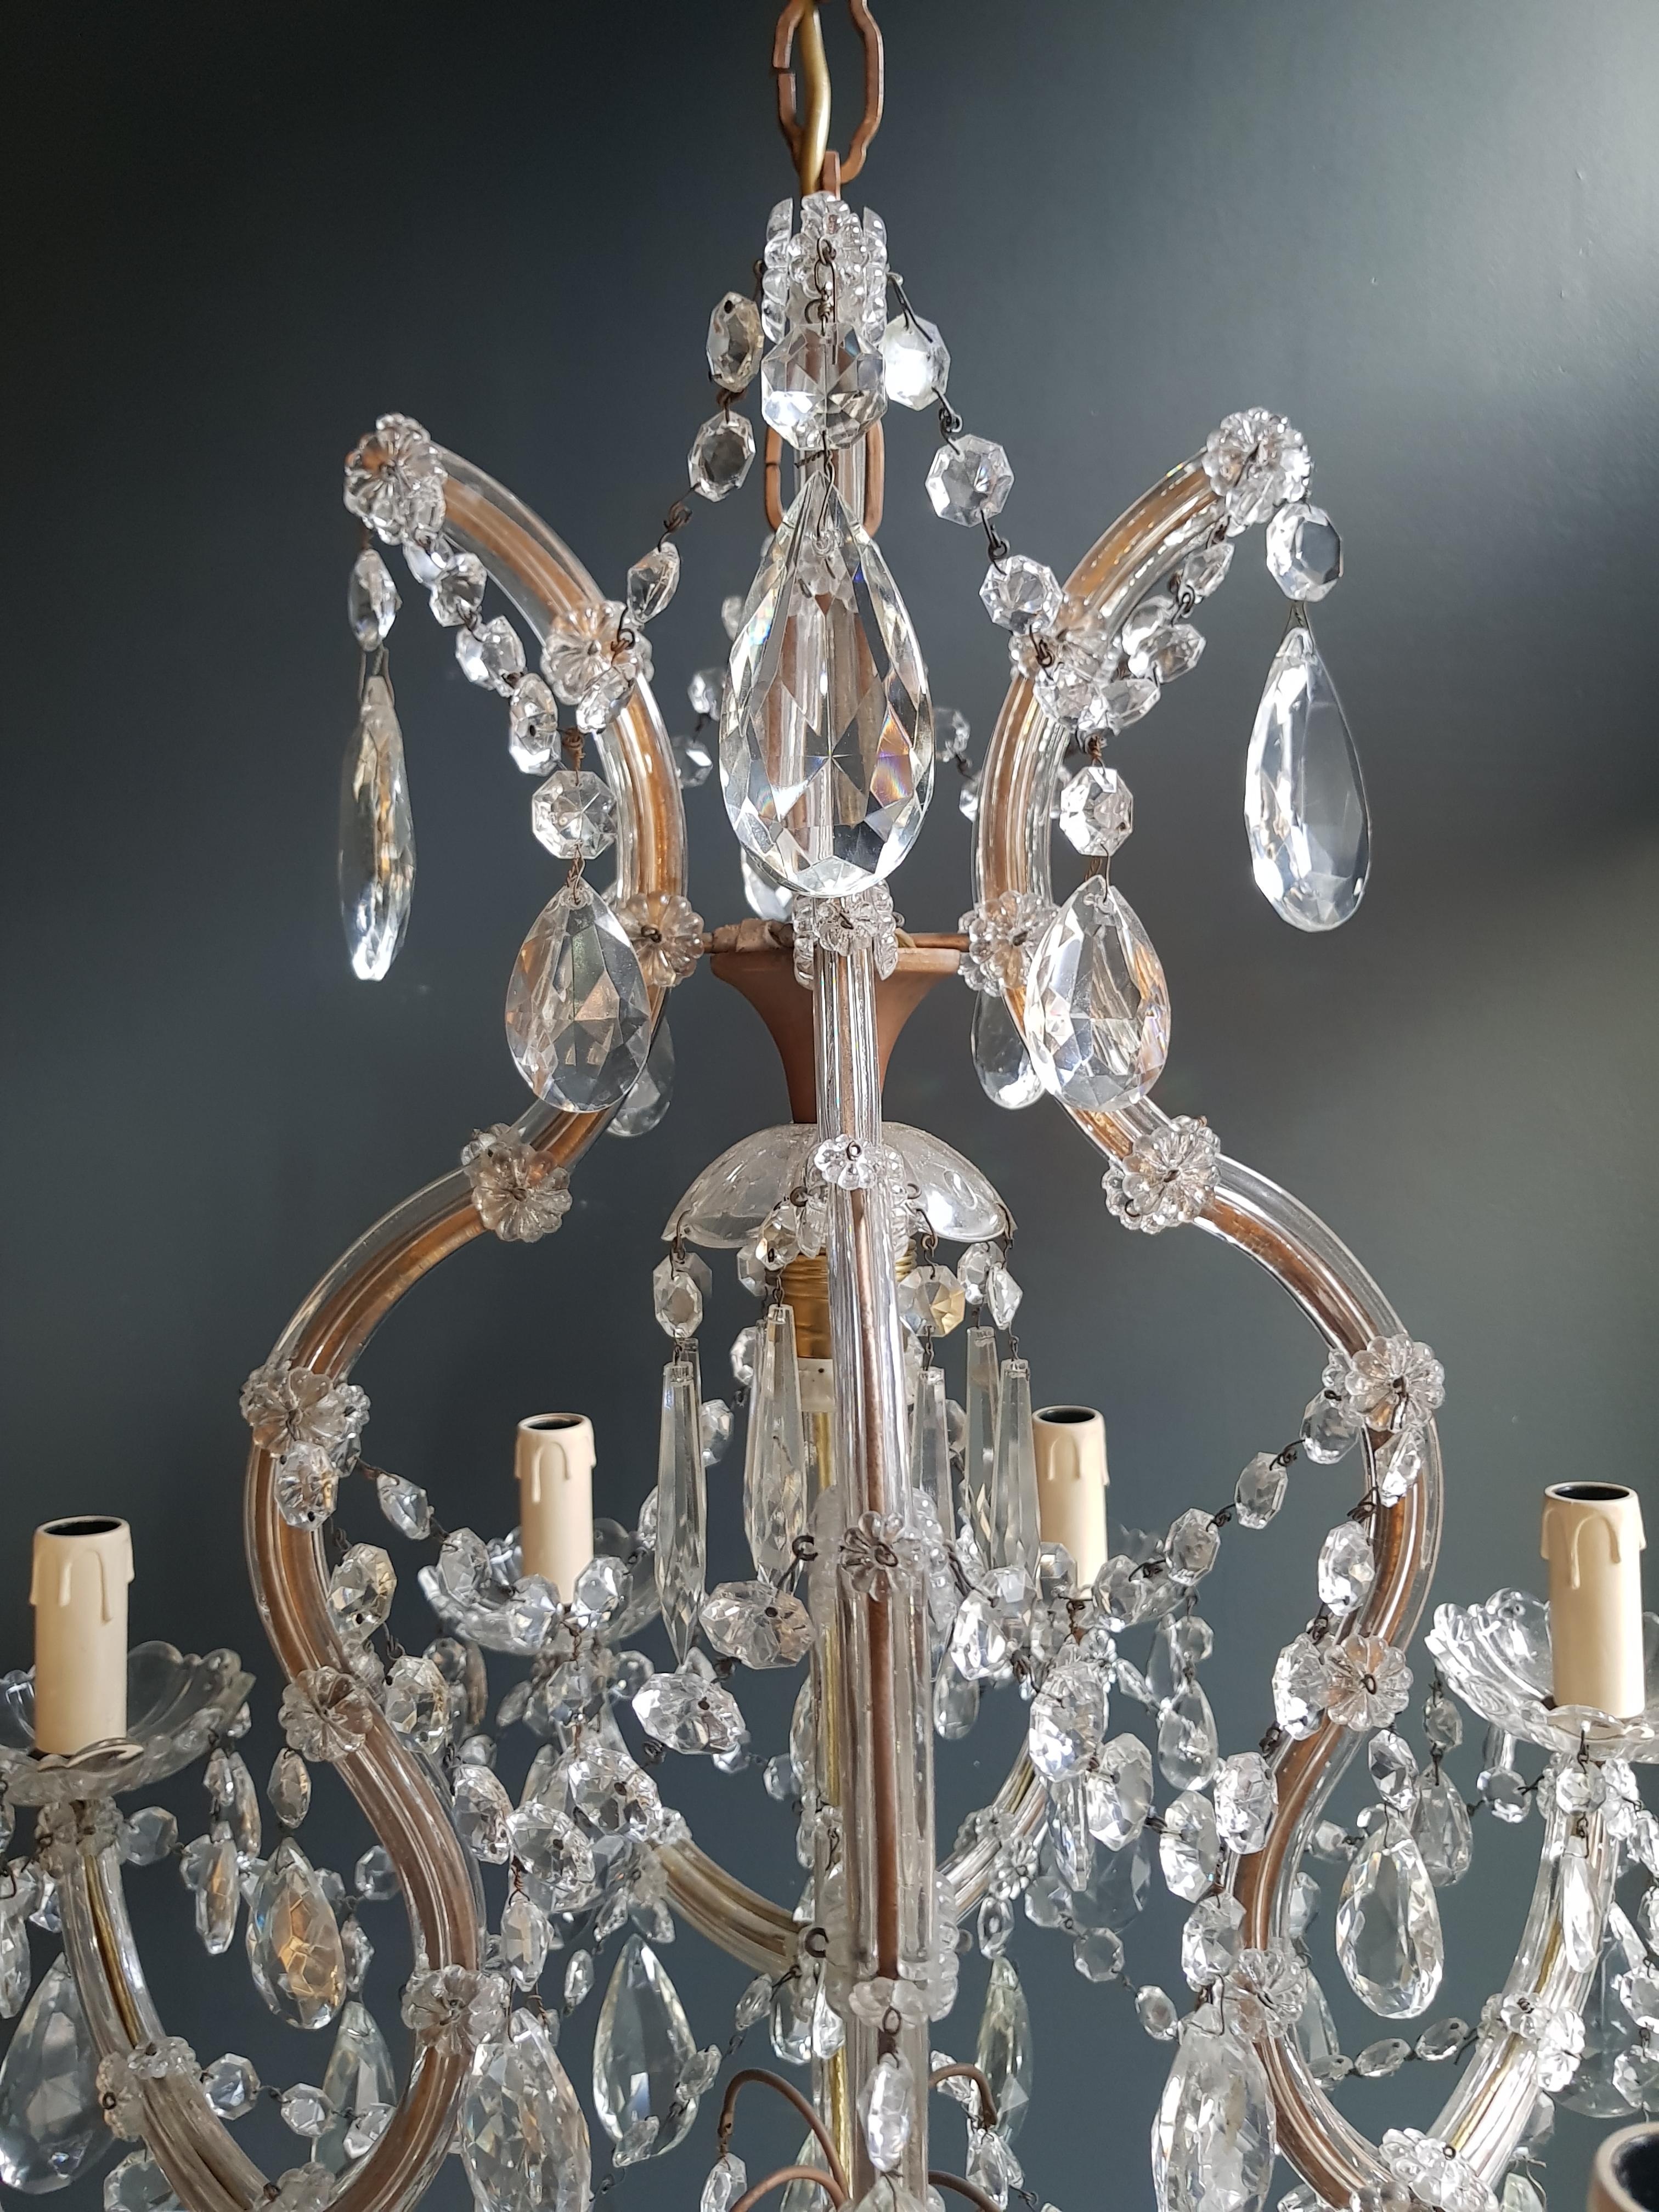 Baroque Maria Theresa Crystal Chandelier Antique Ceiling Lamp Lustre Art Nouveau